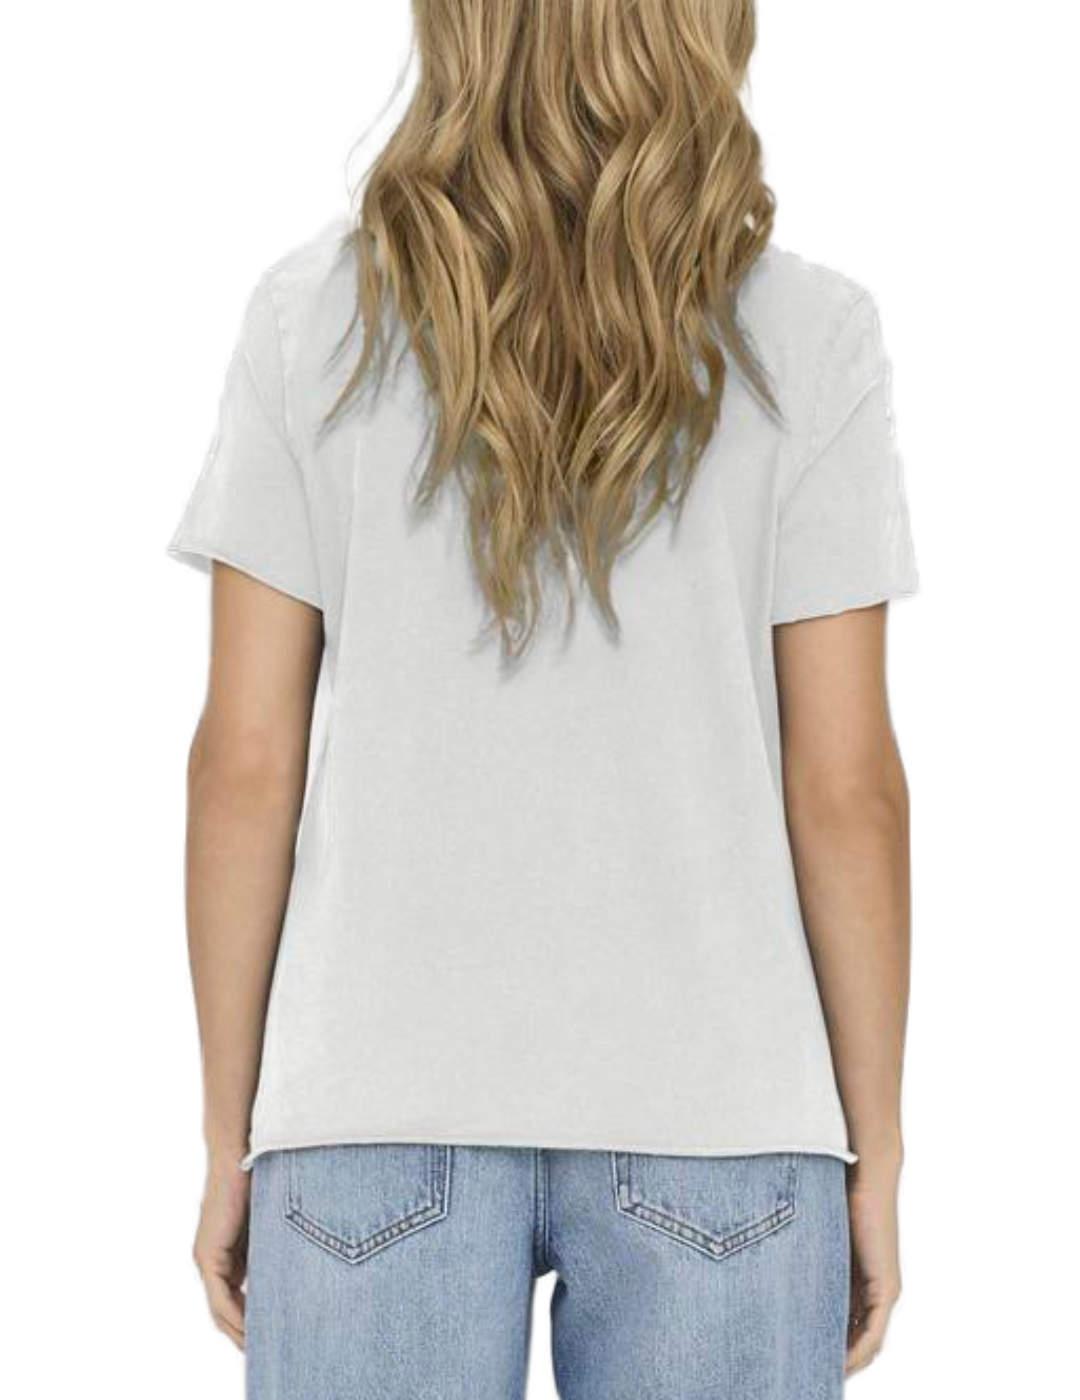 Camiseta Only Lucy Rock dune blanca manga corta de mujer